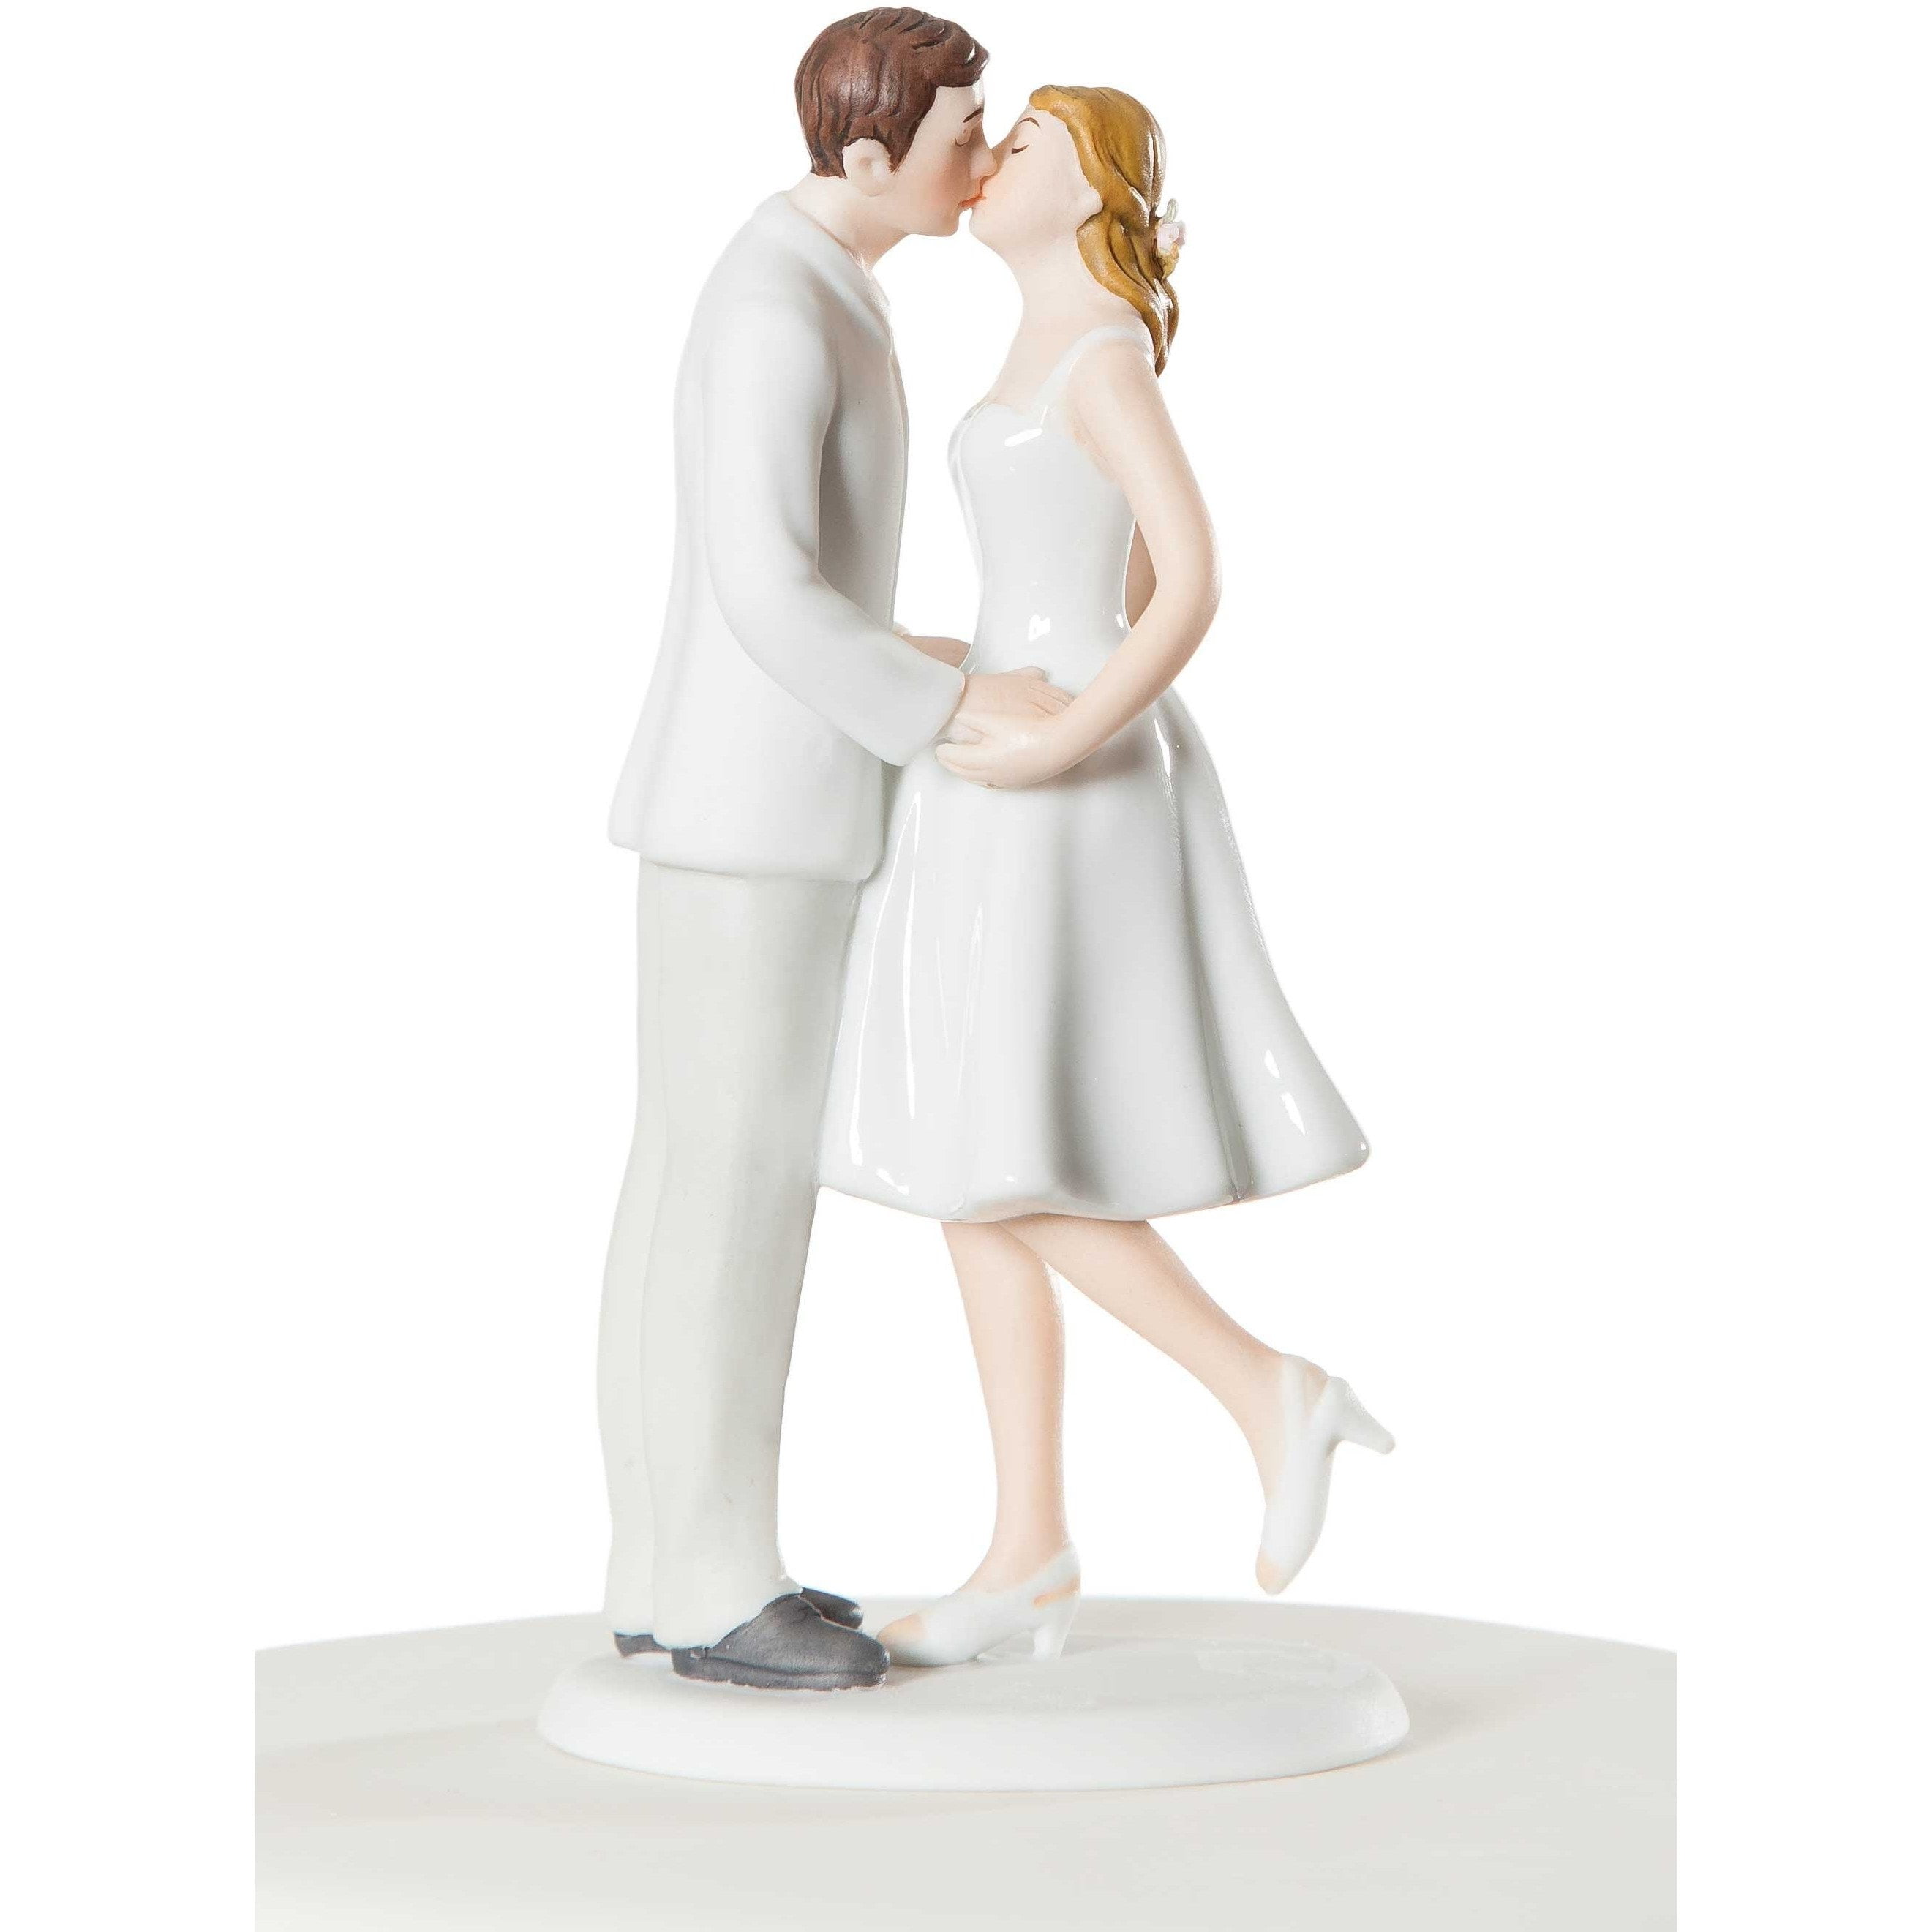 Adorable "Leg Pop" Wedding Bride and Groom Cake Topper 